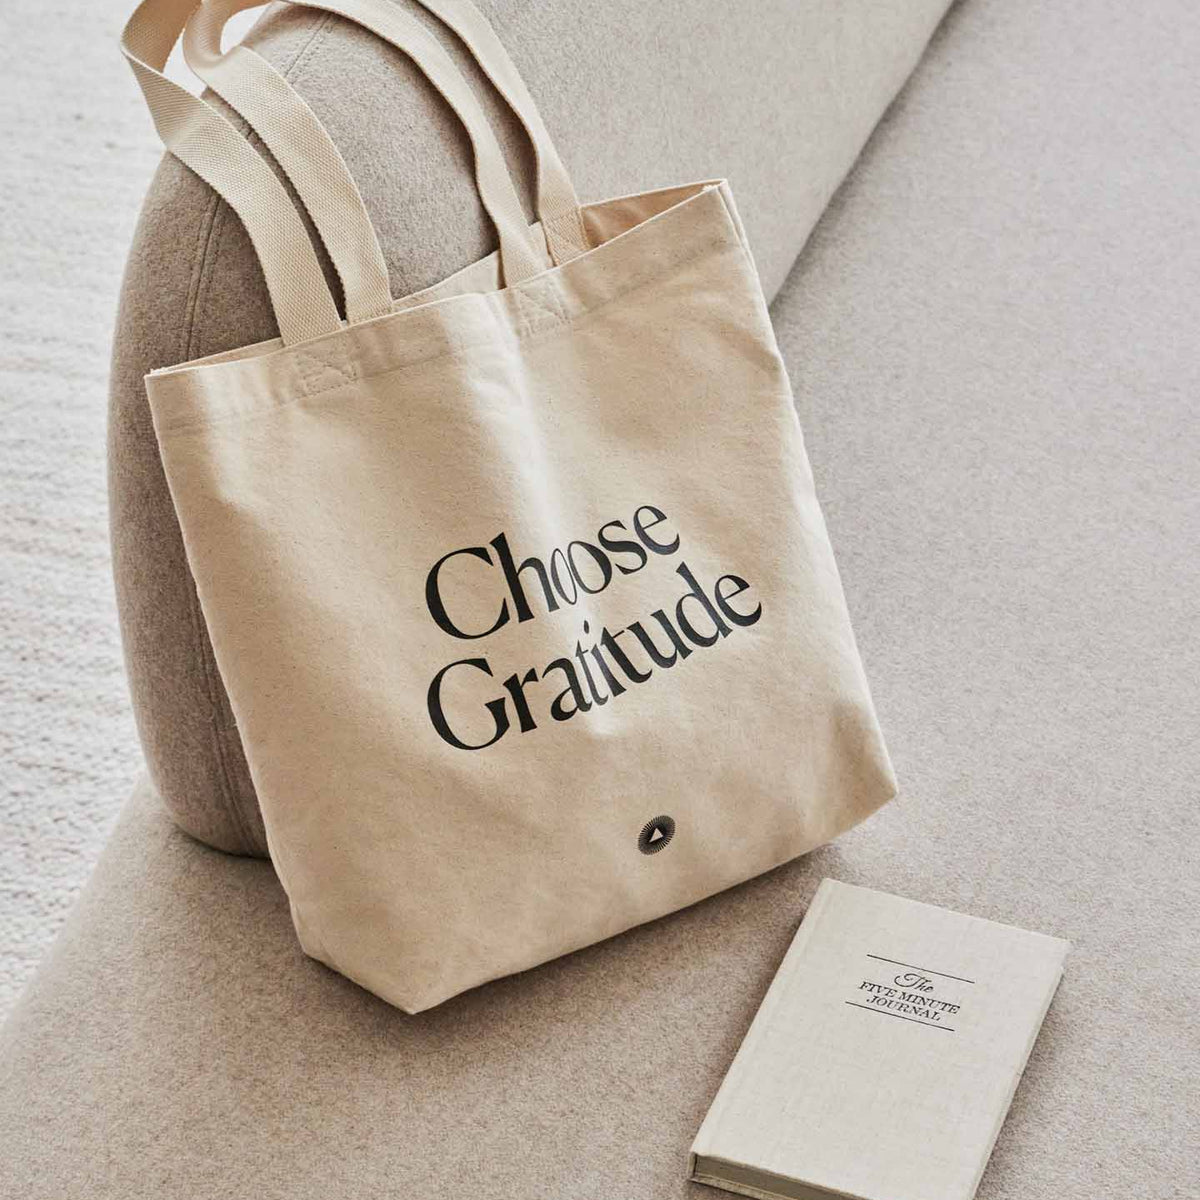 Creativity and Intelligence Art Tote Bag